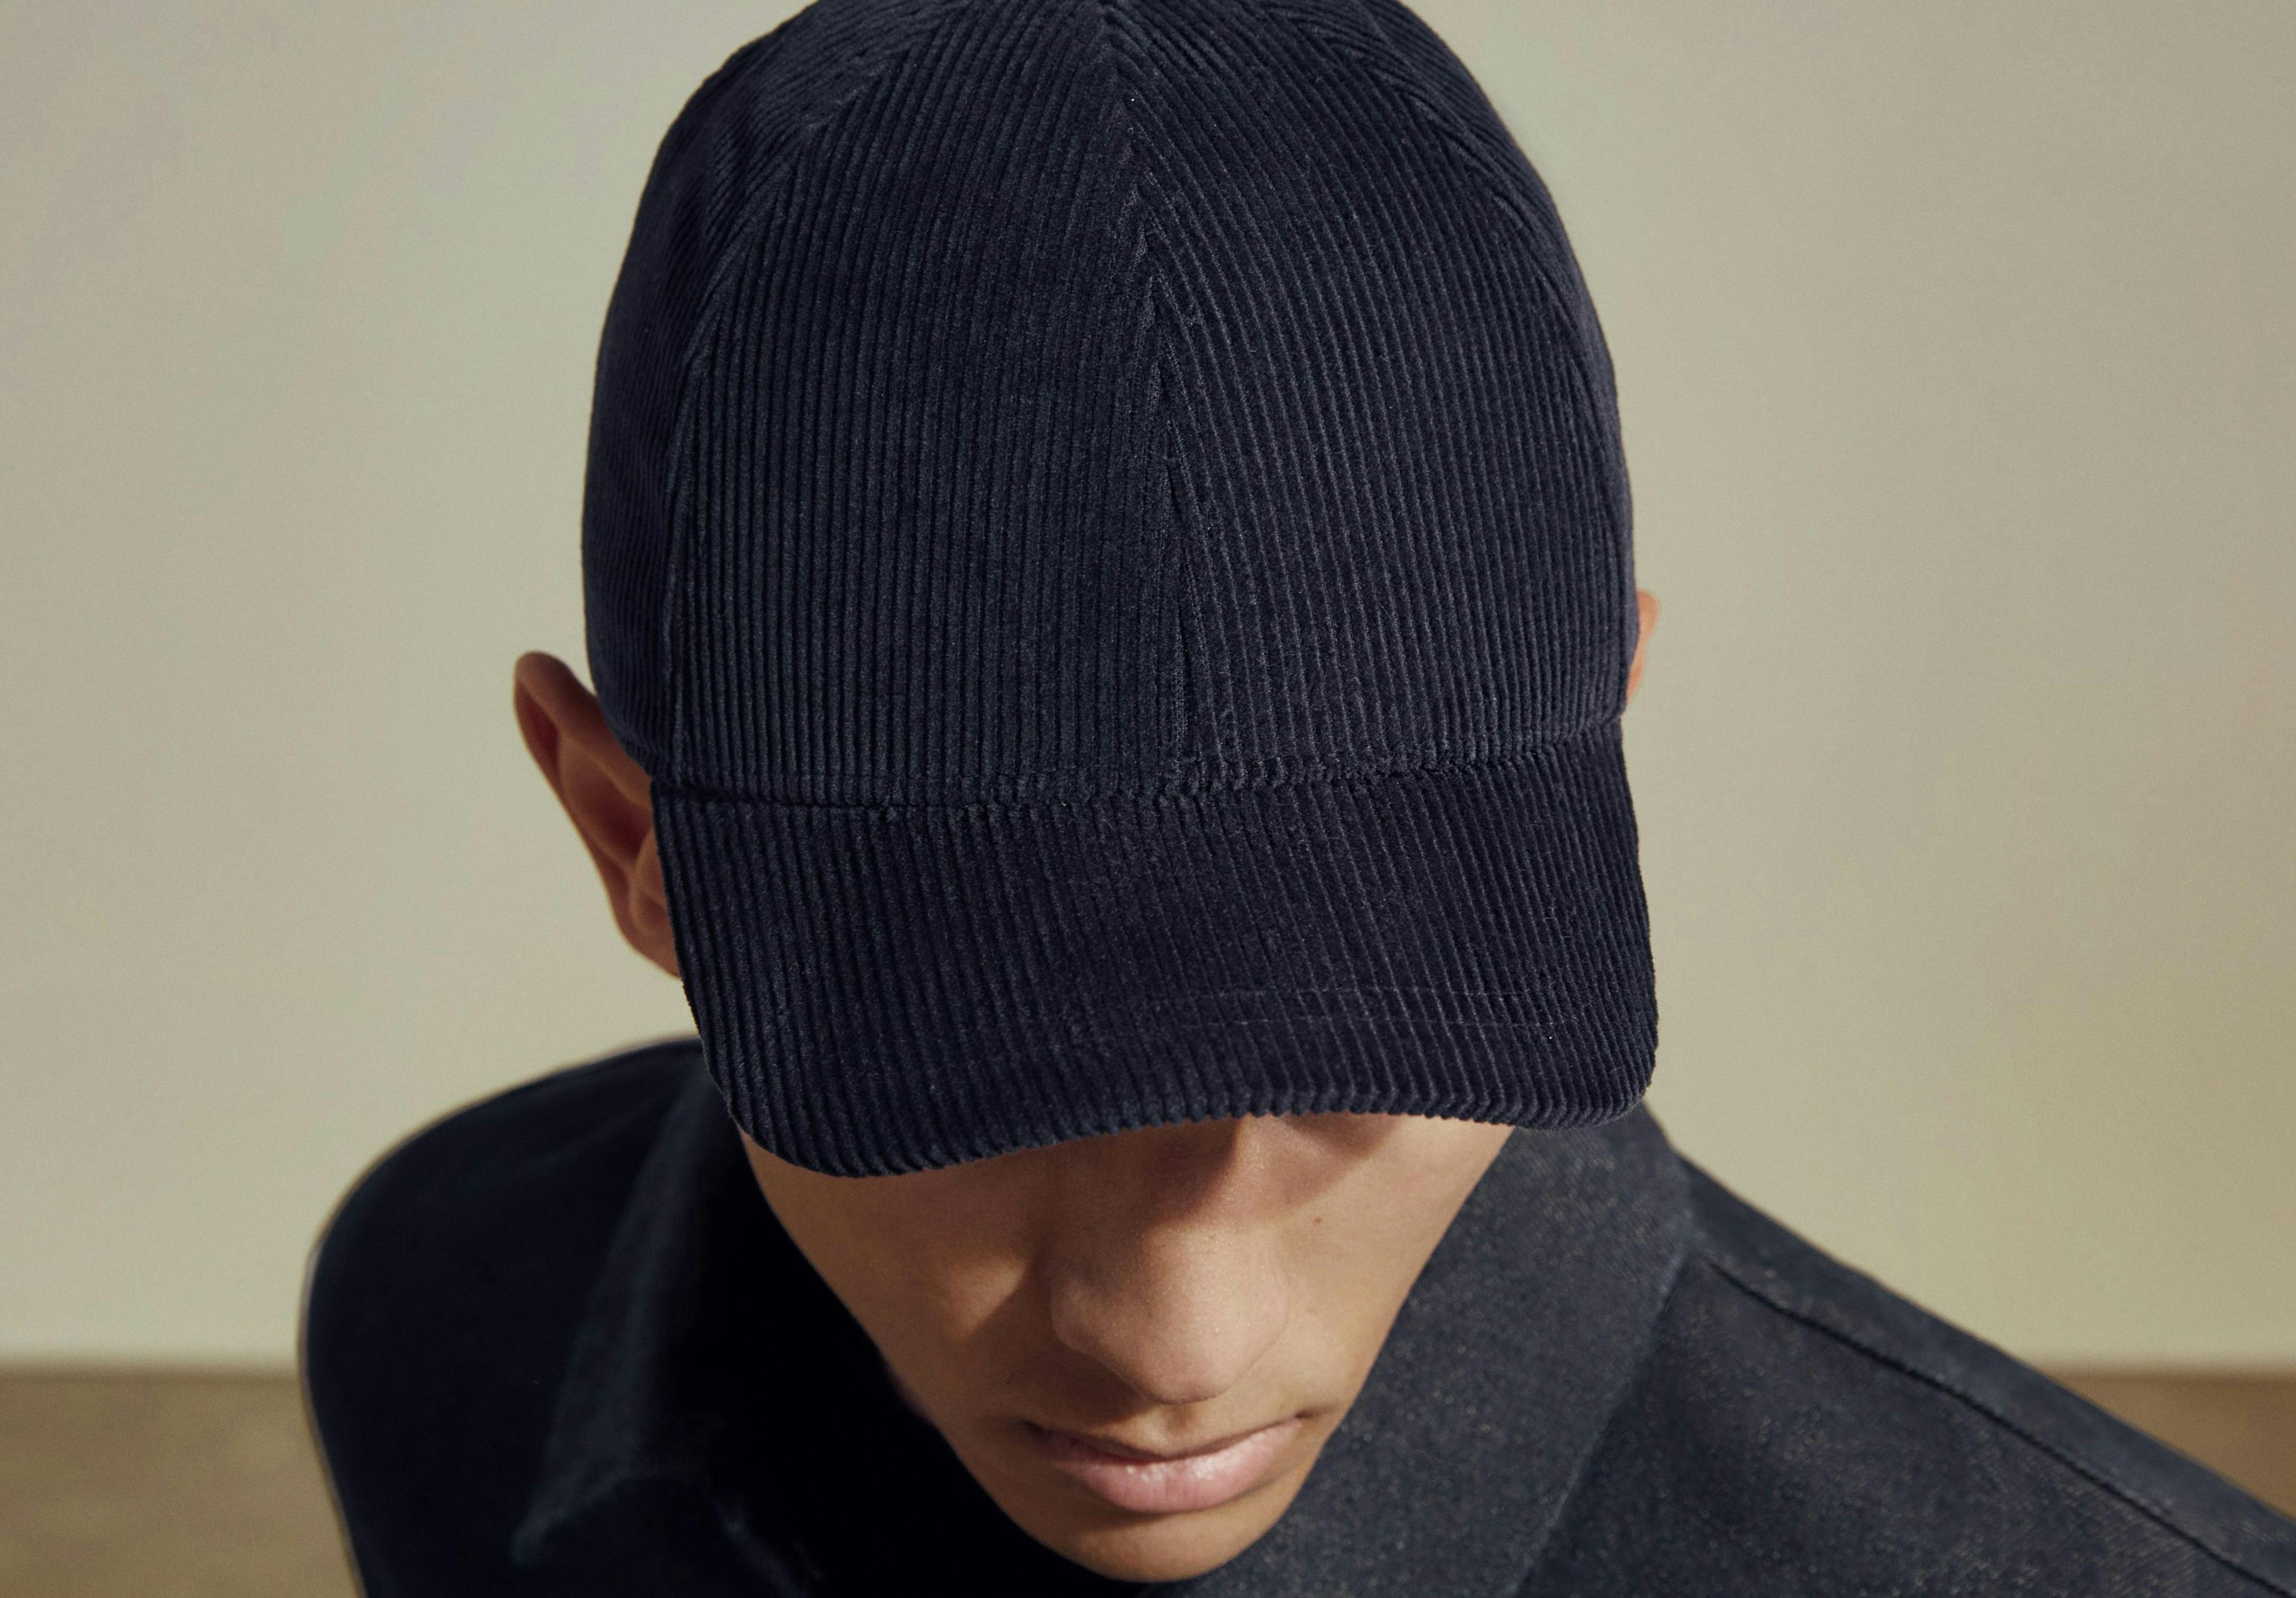 clothing apparel person human hat beanie cap